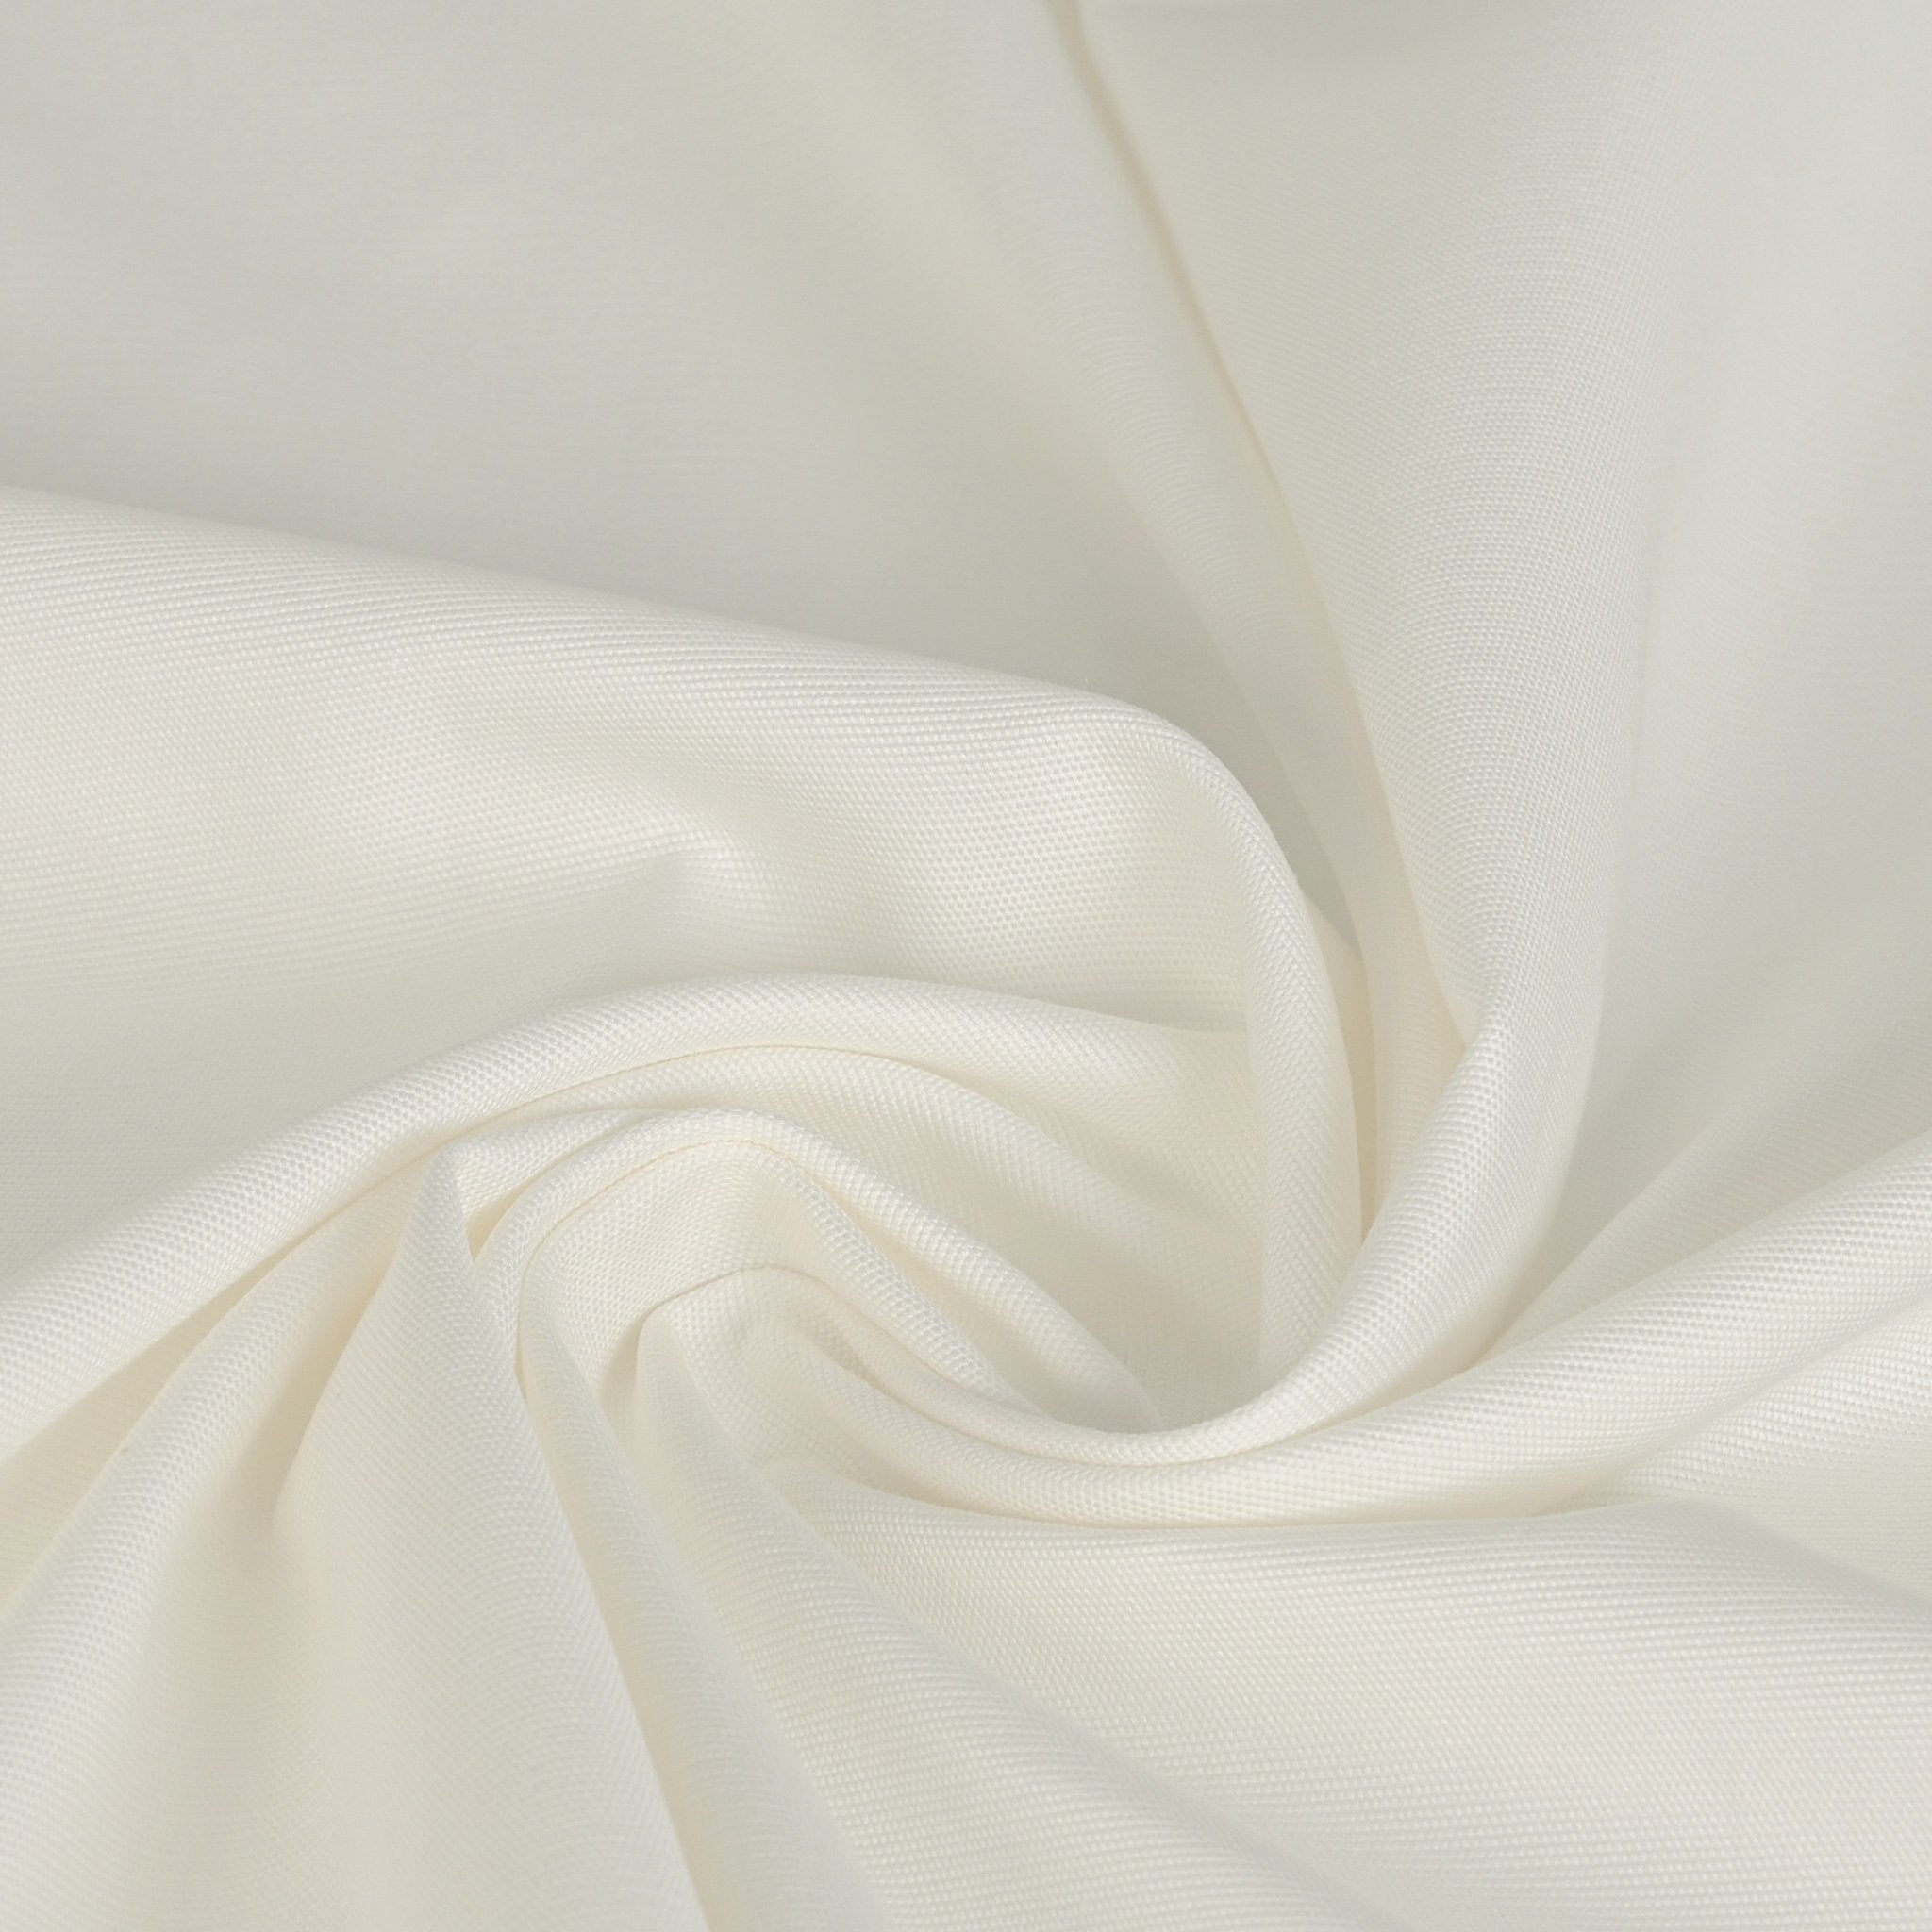 Ivory Grosgrain Fabric 251